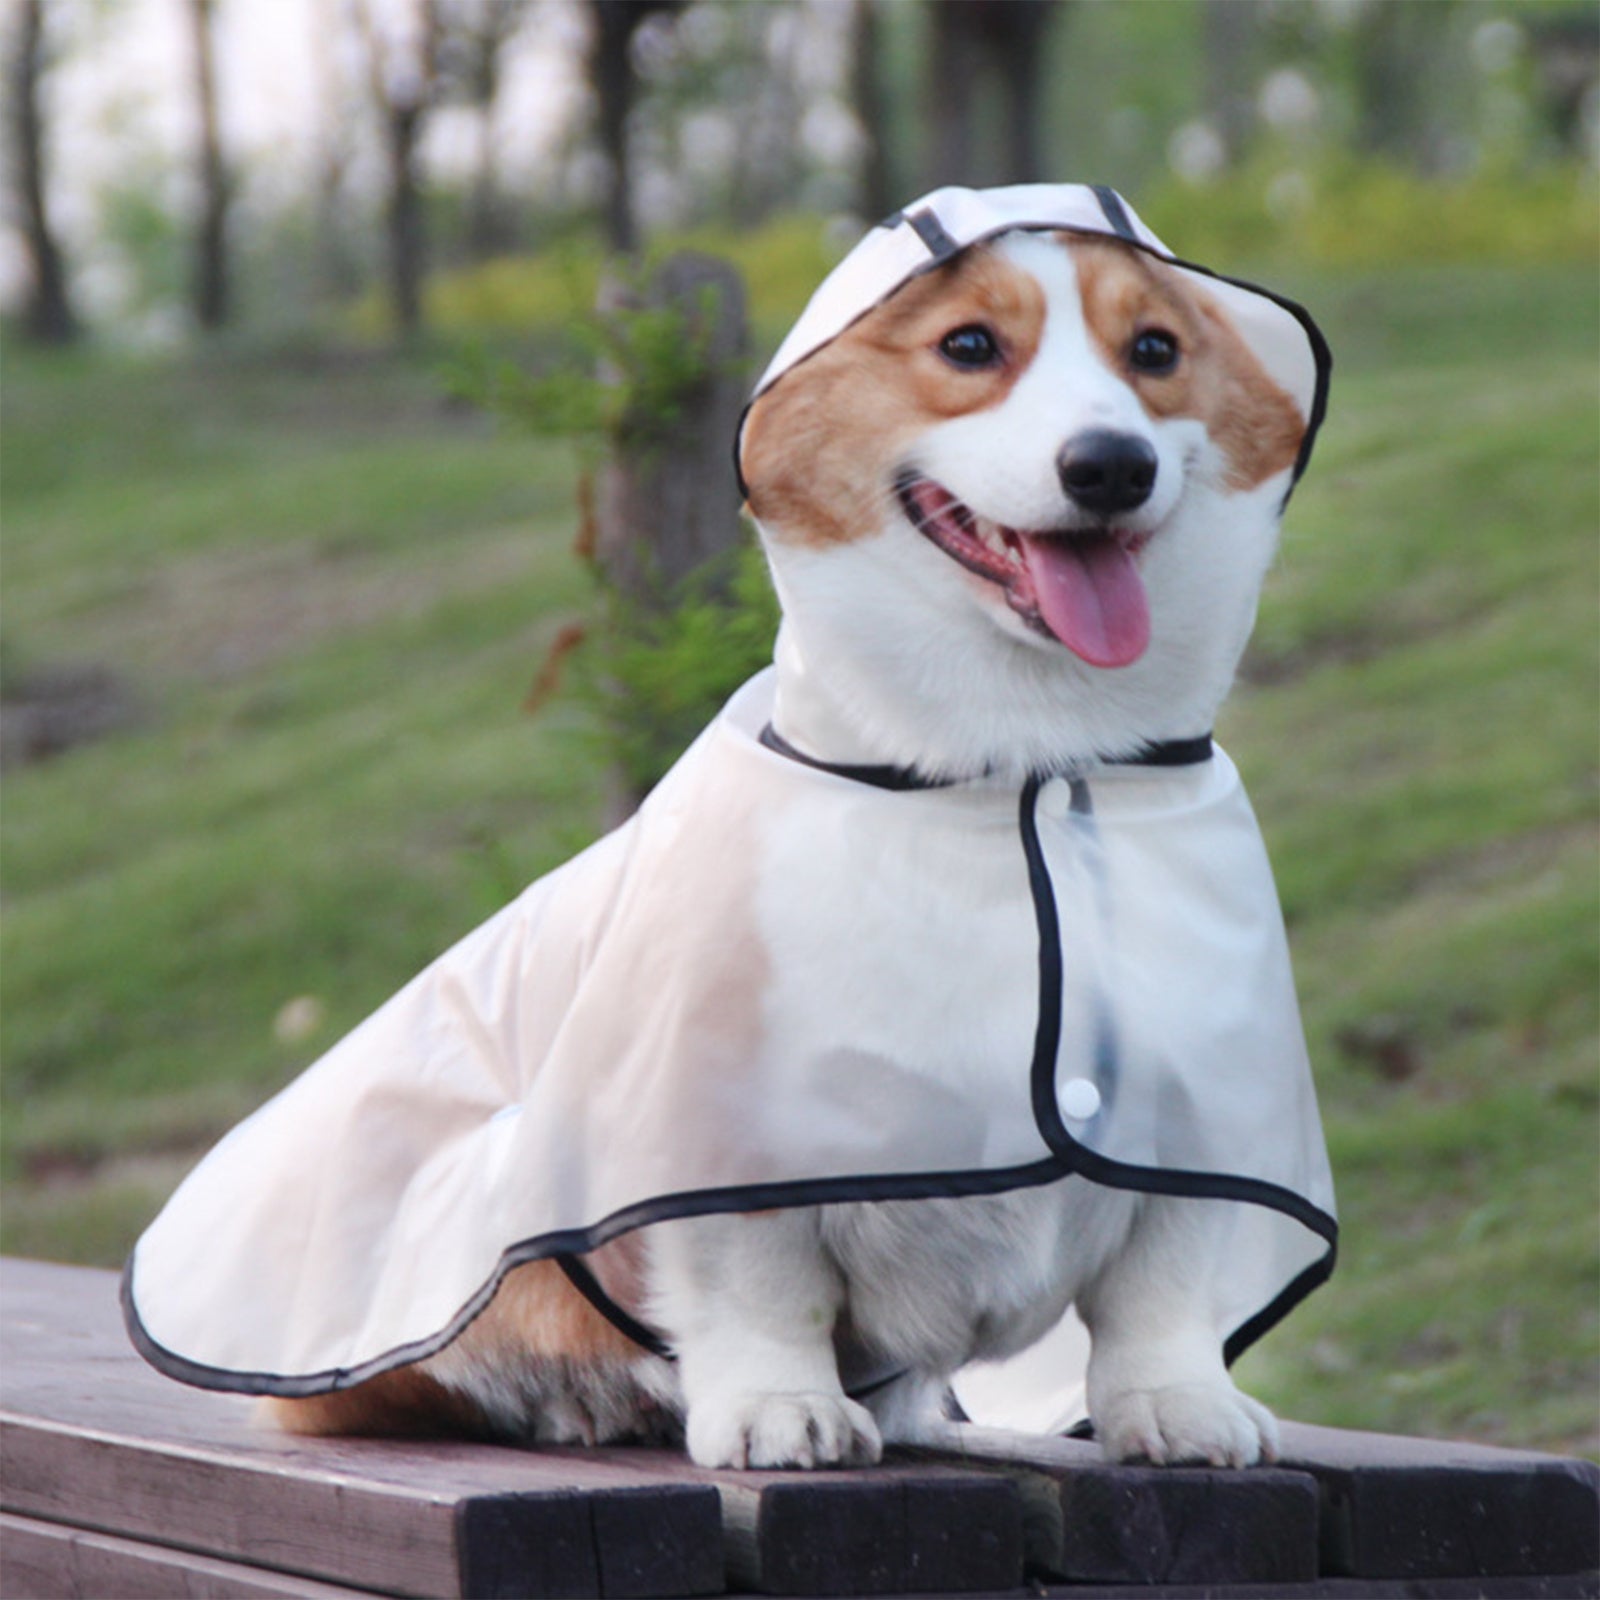 Pawfriends TPU Transparent Pet Cape Raincoat Large Dog Teddy Fado Koki Dog Clothing XXXL